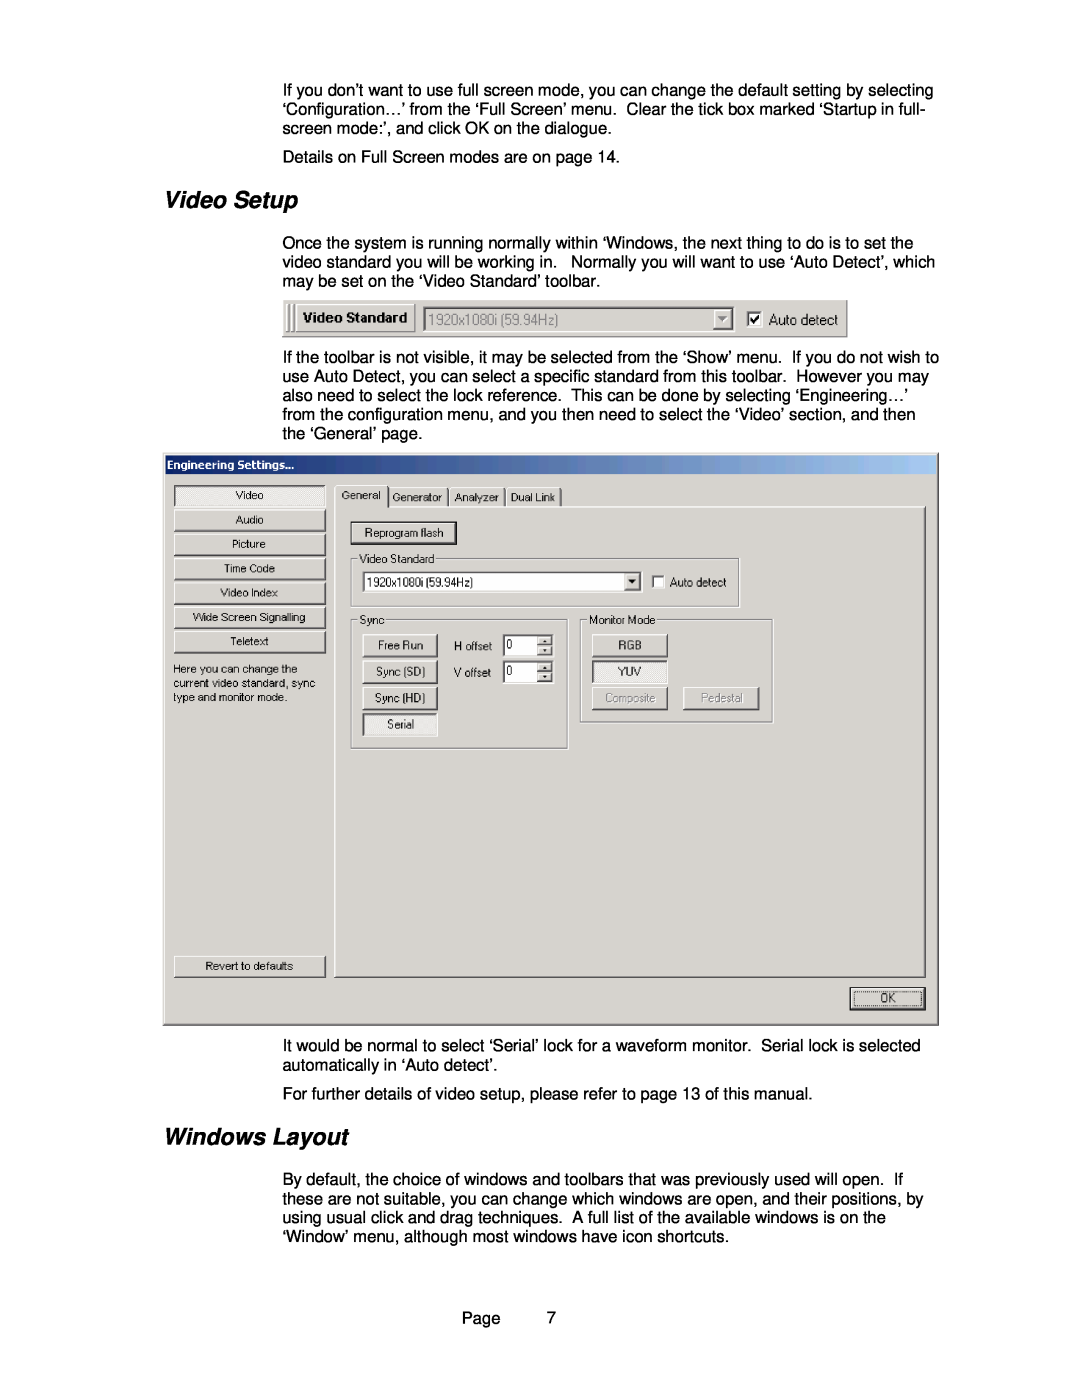 OmniTek OmniTek XR manual Video Setup, Windows Layout 